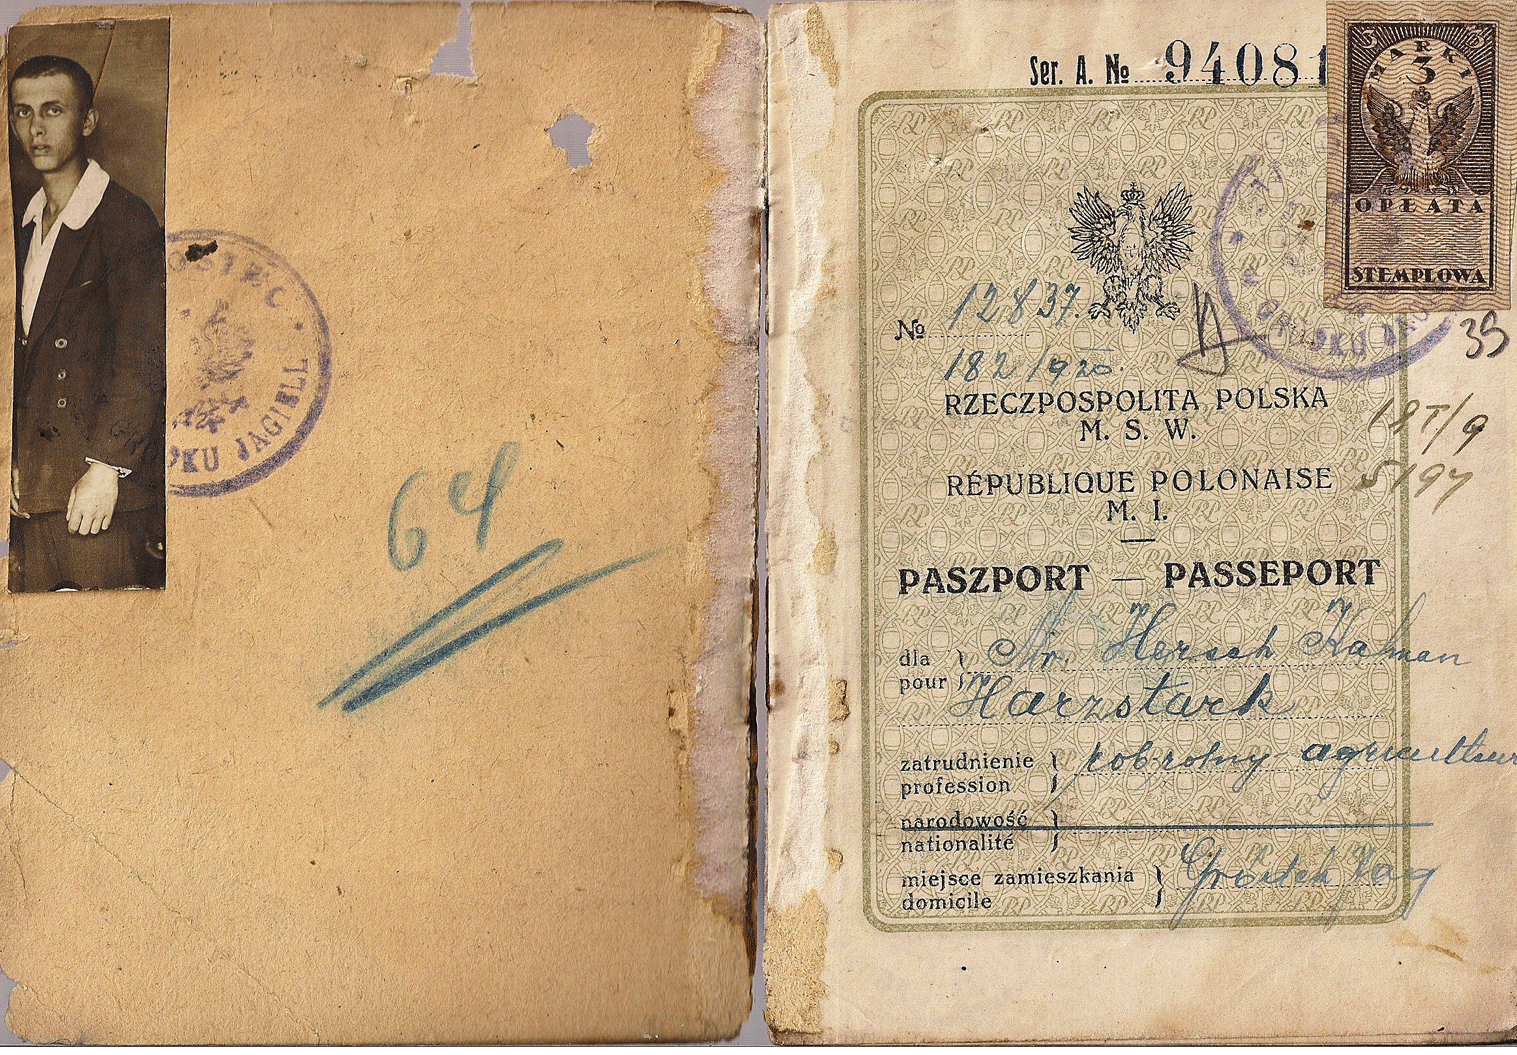 1920 Polish passport